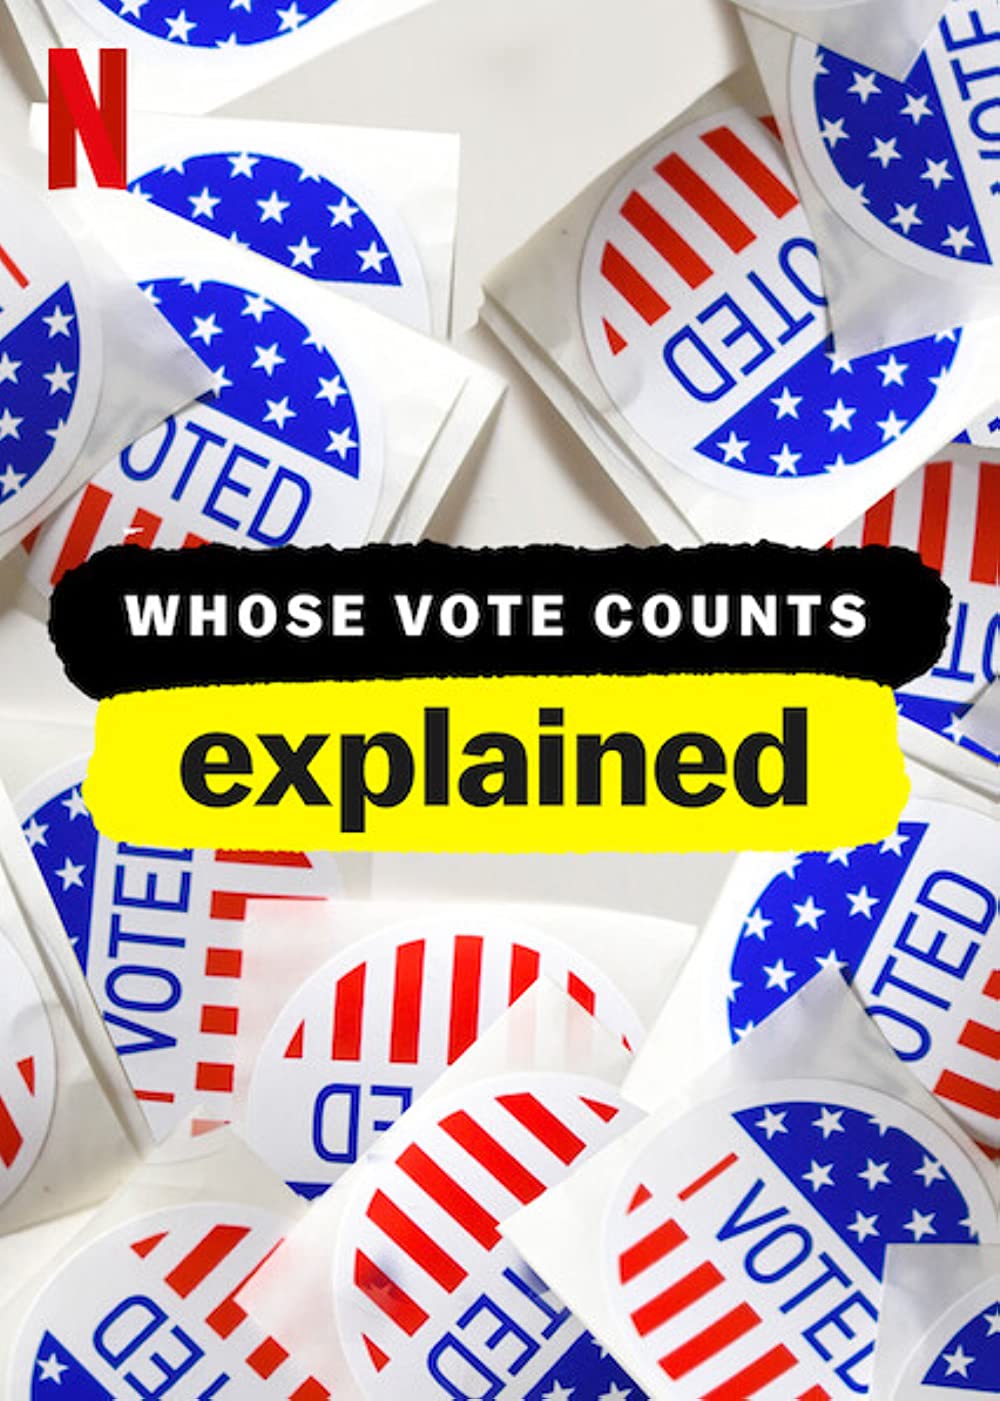 Filmbeschreibung zu Explained: US-Wahlen